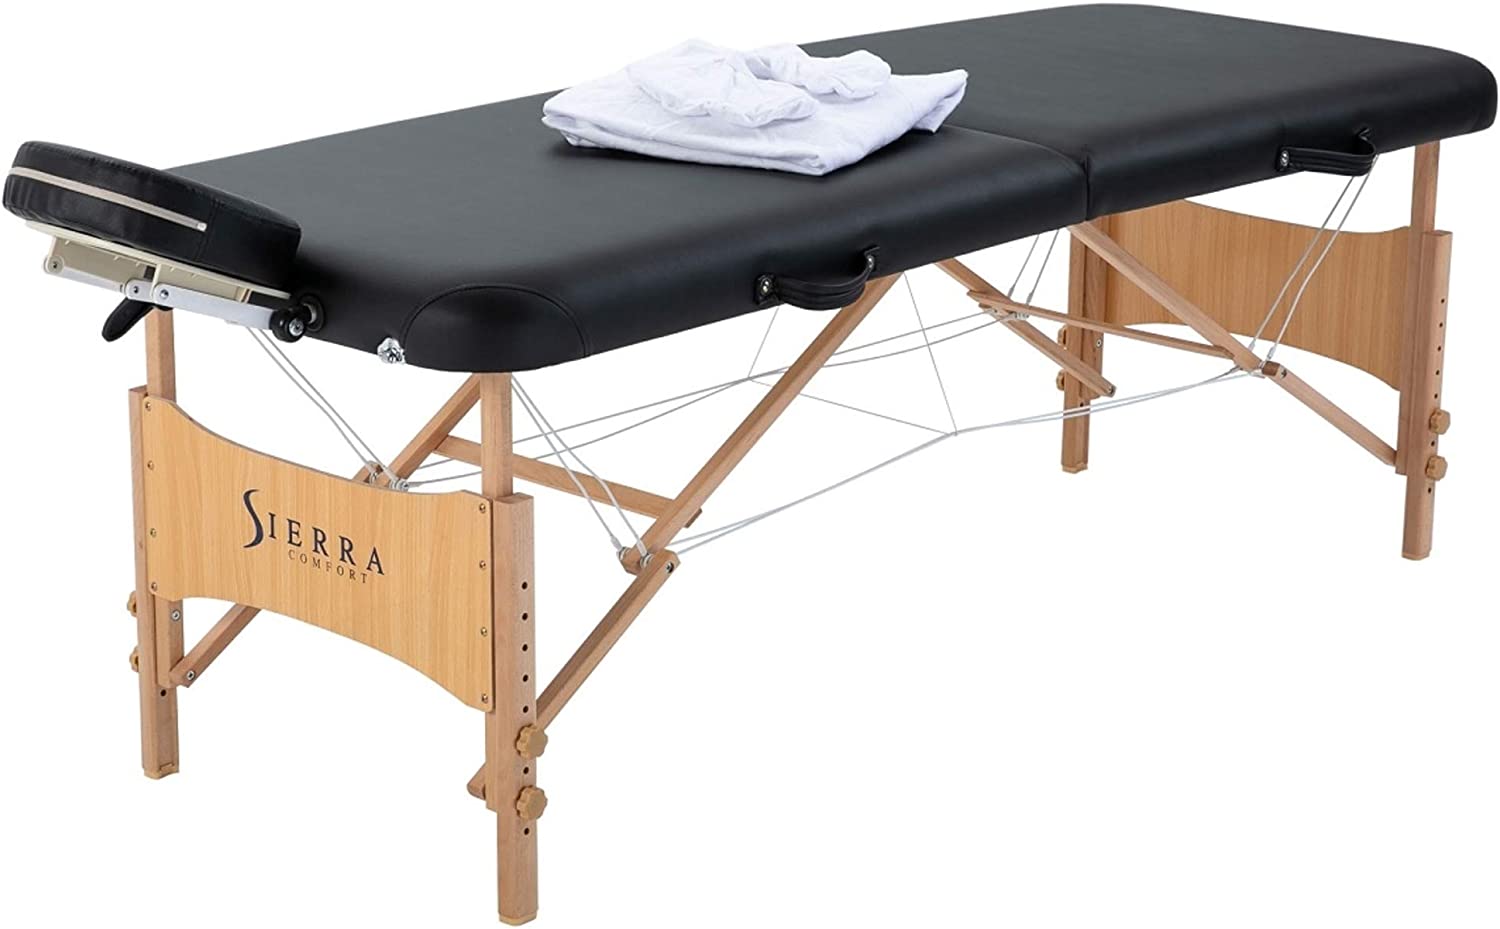 Sierra Comfort All Inclusive Portable Massage Table, Black